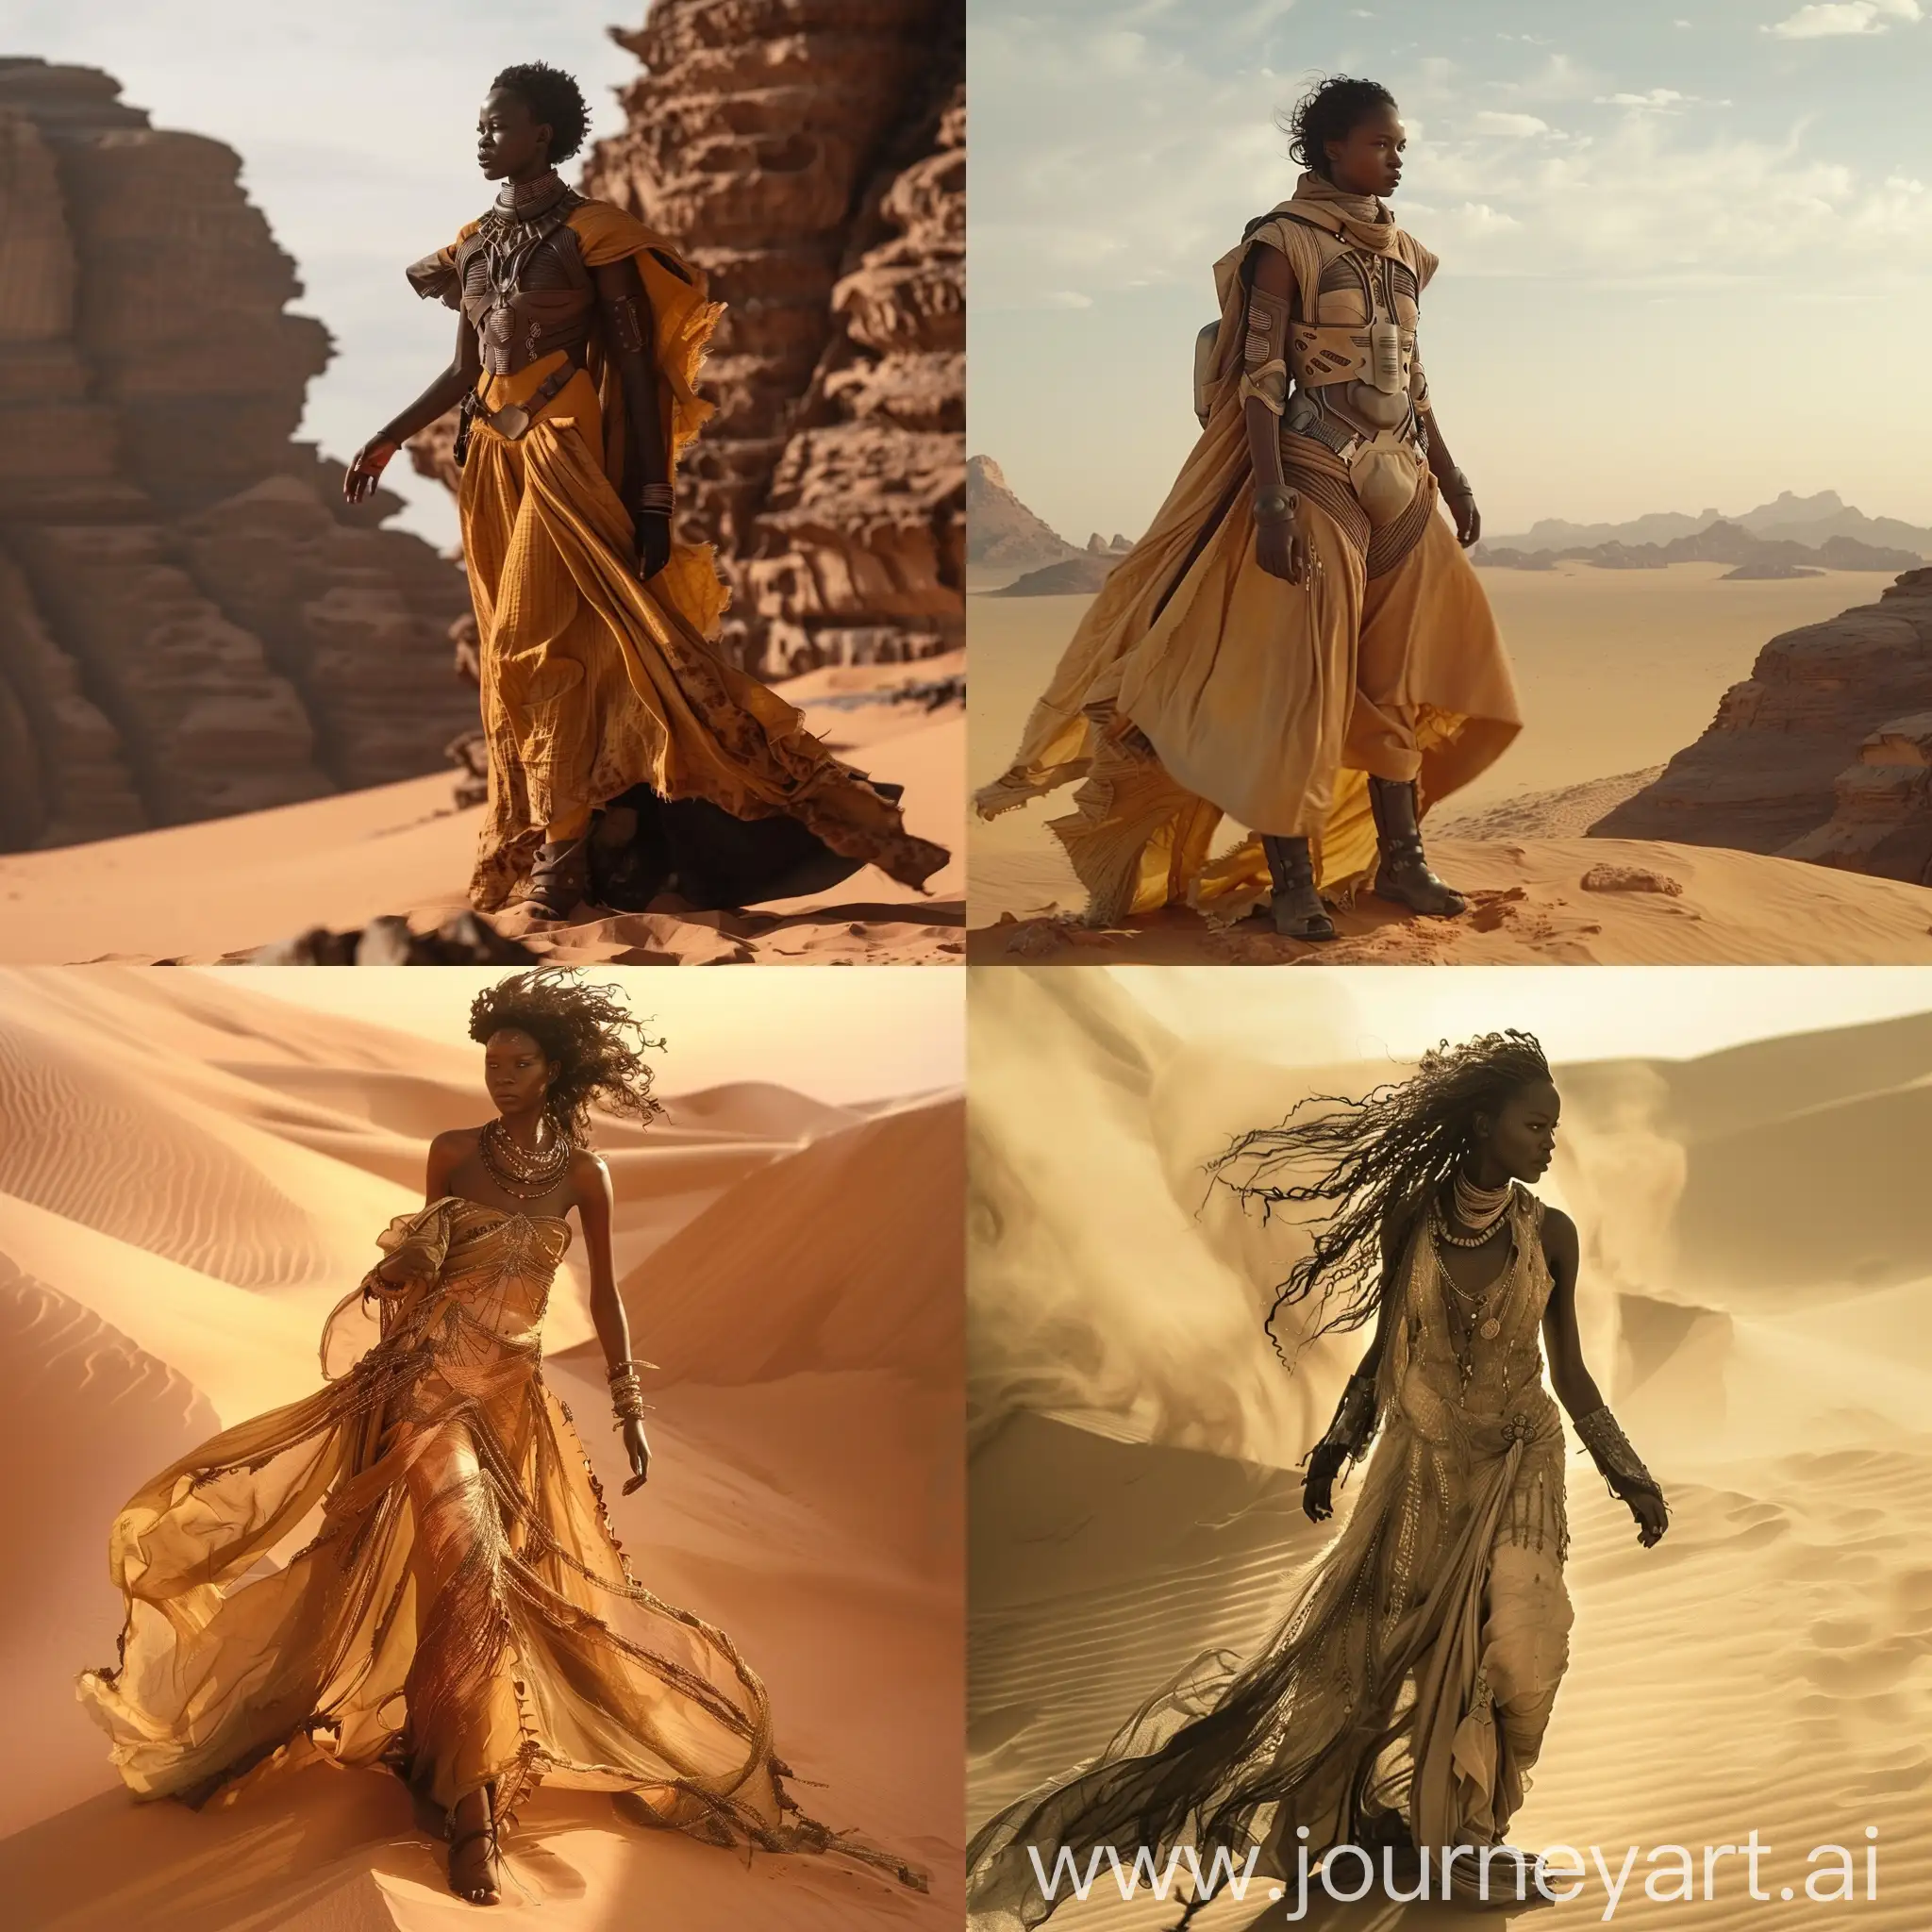 African-Girl-in-Desert-Cave-Dress-Inspired-by-Dune